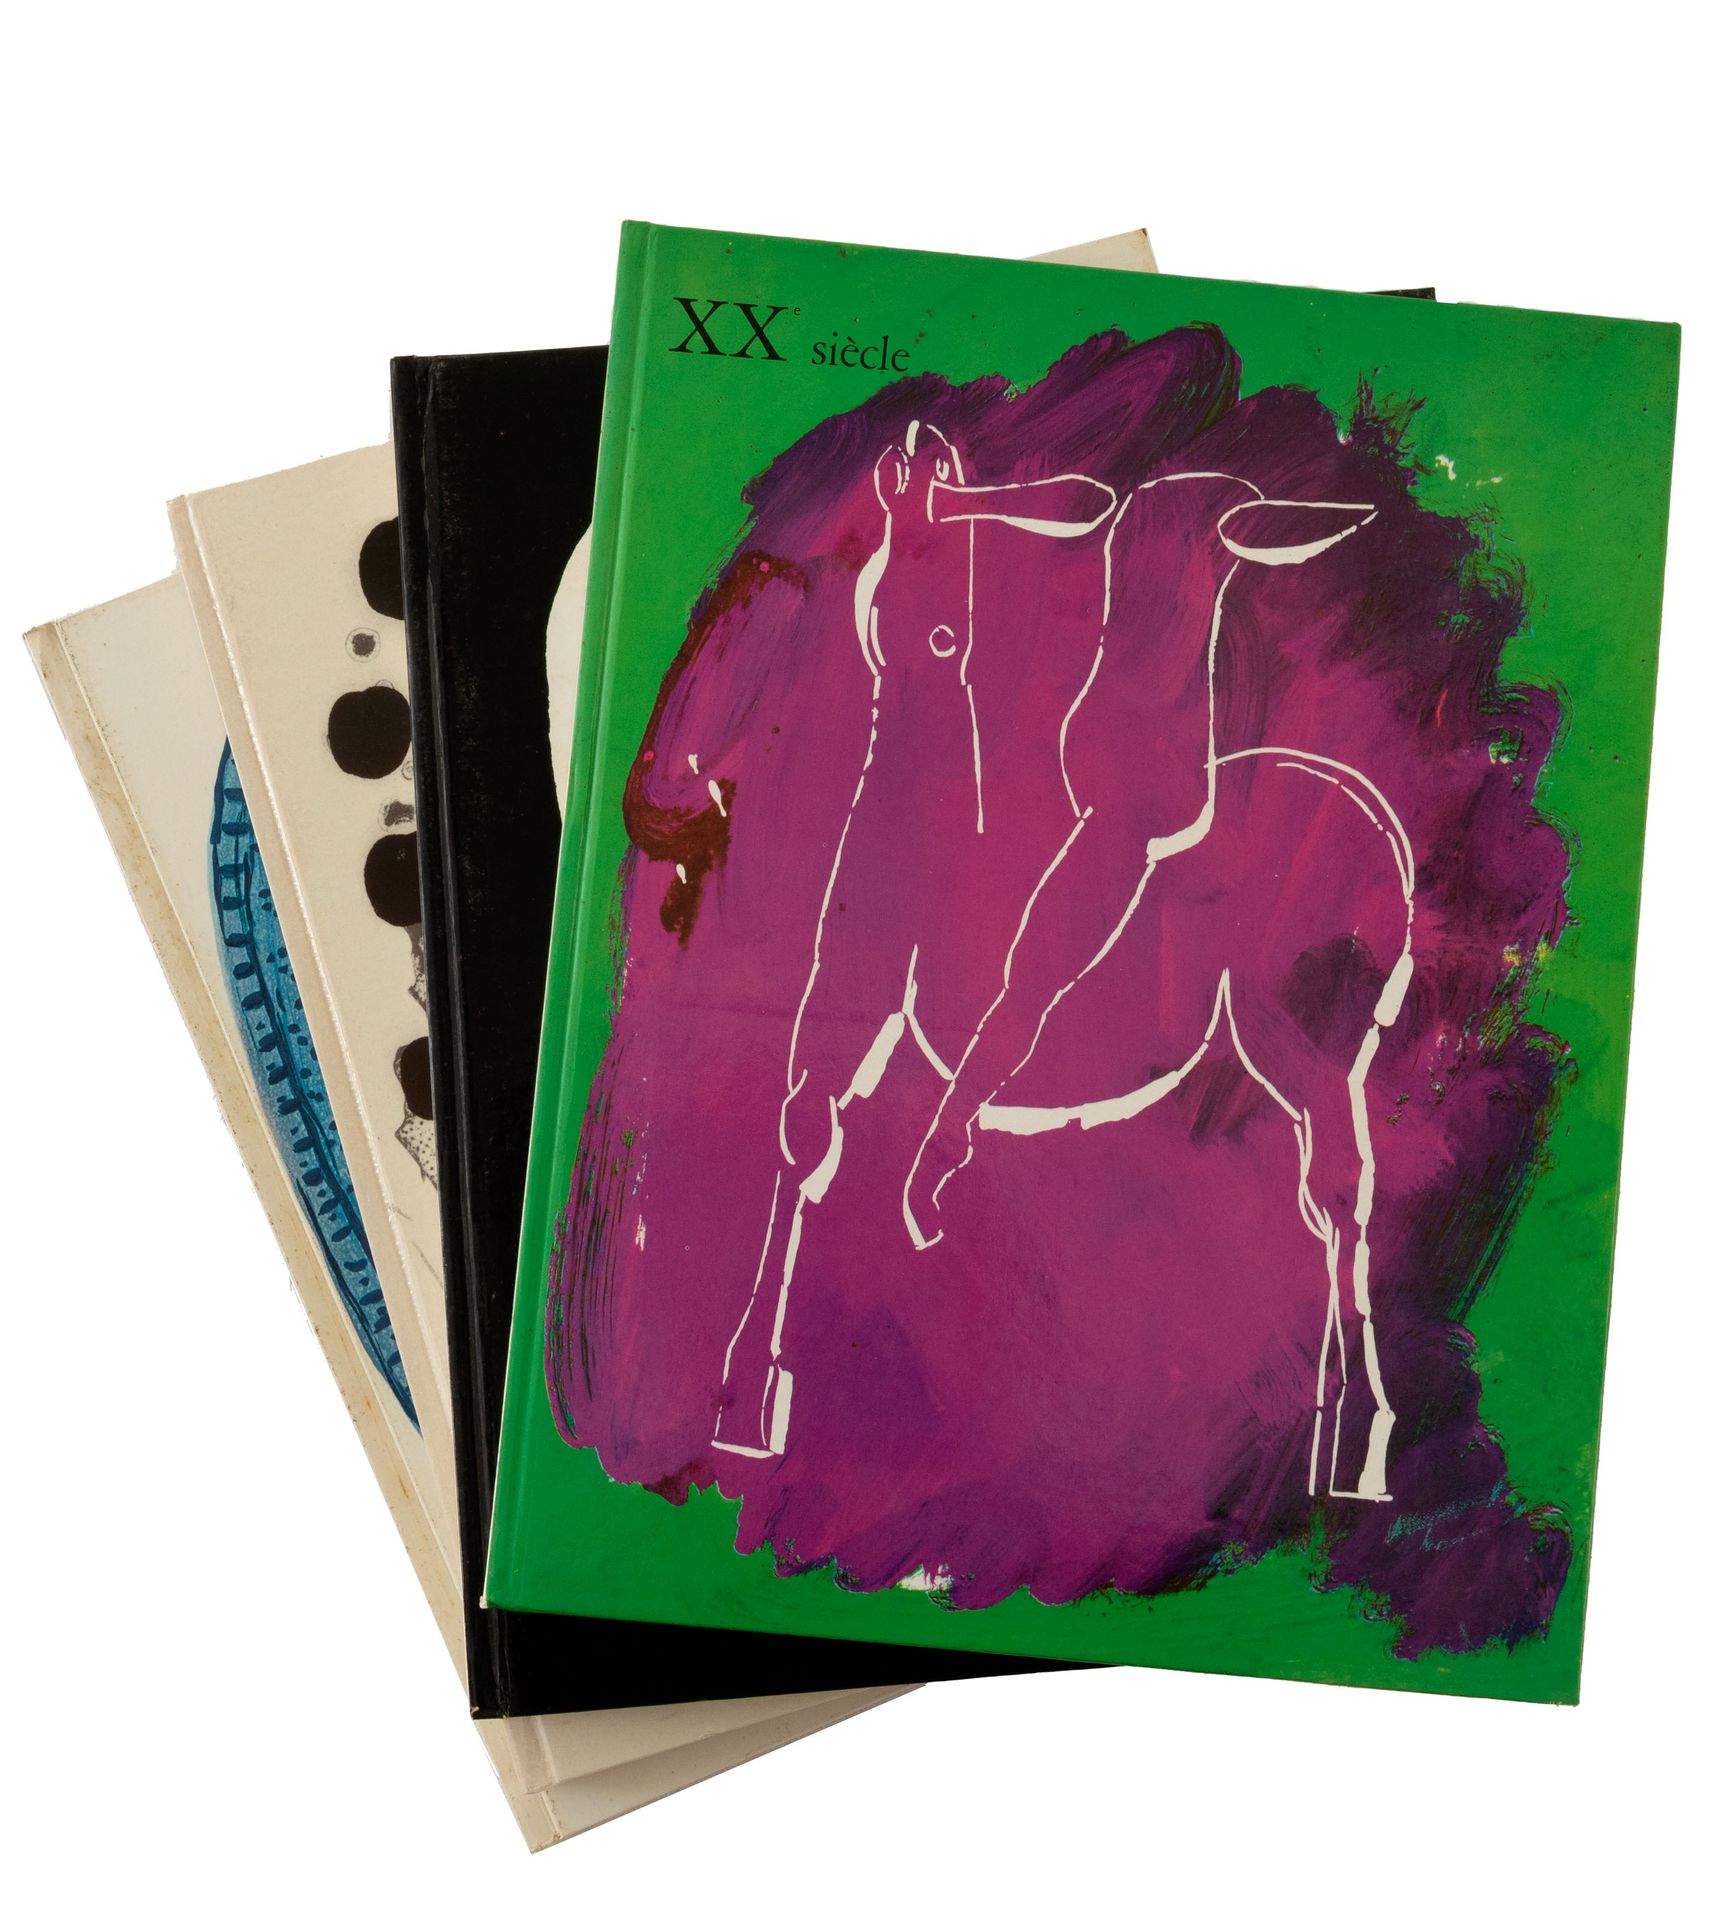 (Chagall-Miró) XXe siècle. Nouvelle série. XXVIII-XXXIe année, nrs. 26-33, 1966-&hellip;